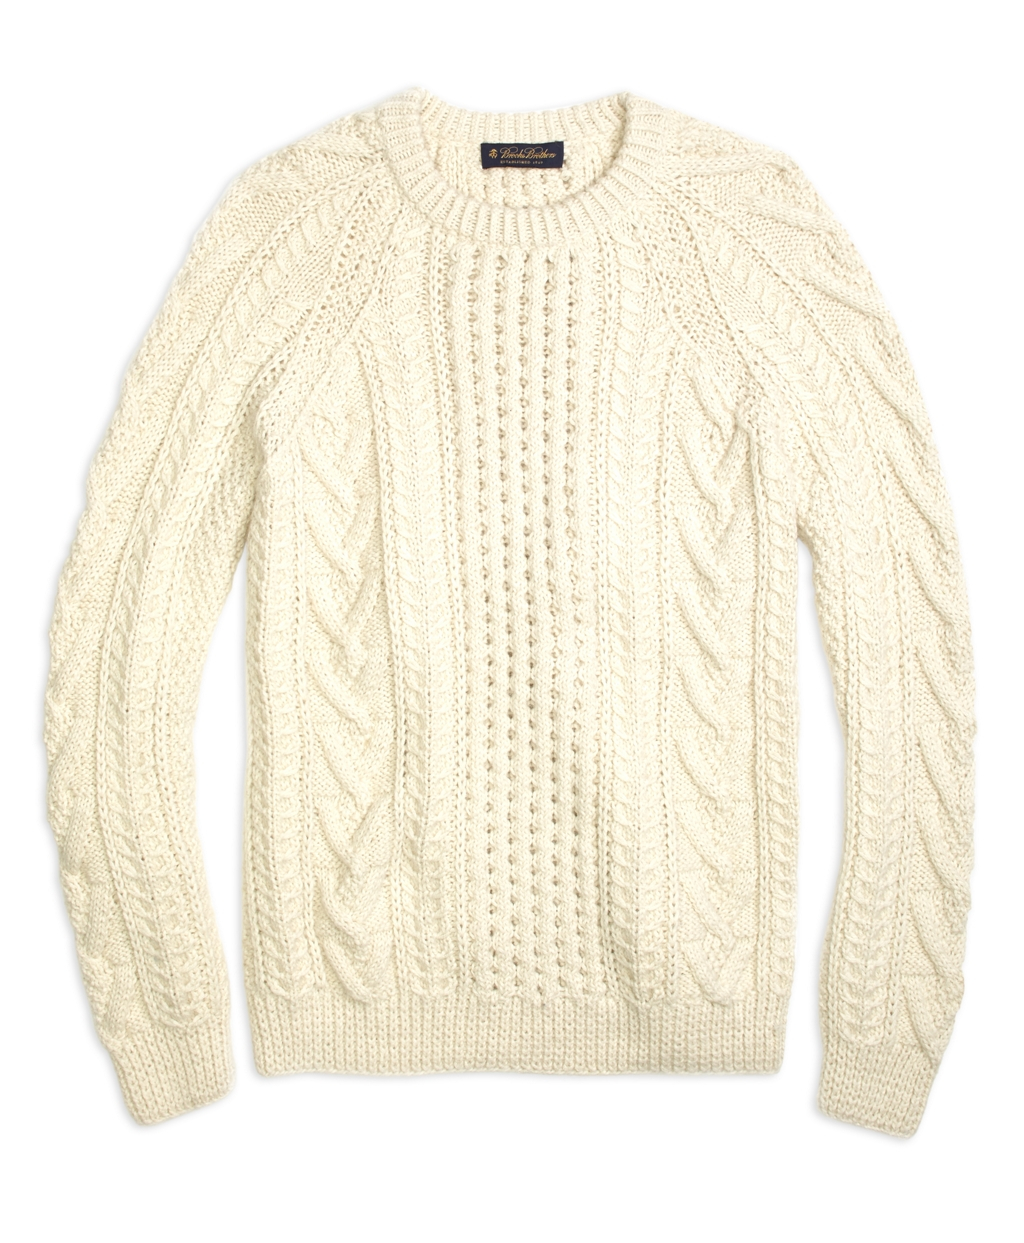 Brooks Brothers Wool Handknit Aran Cable Crewneck Sweater in Cream ...